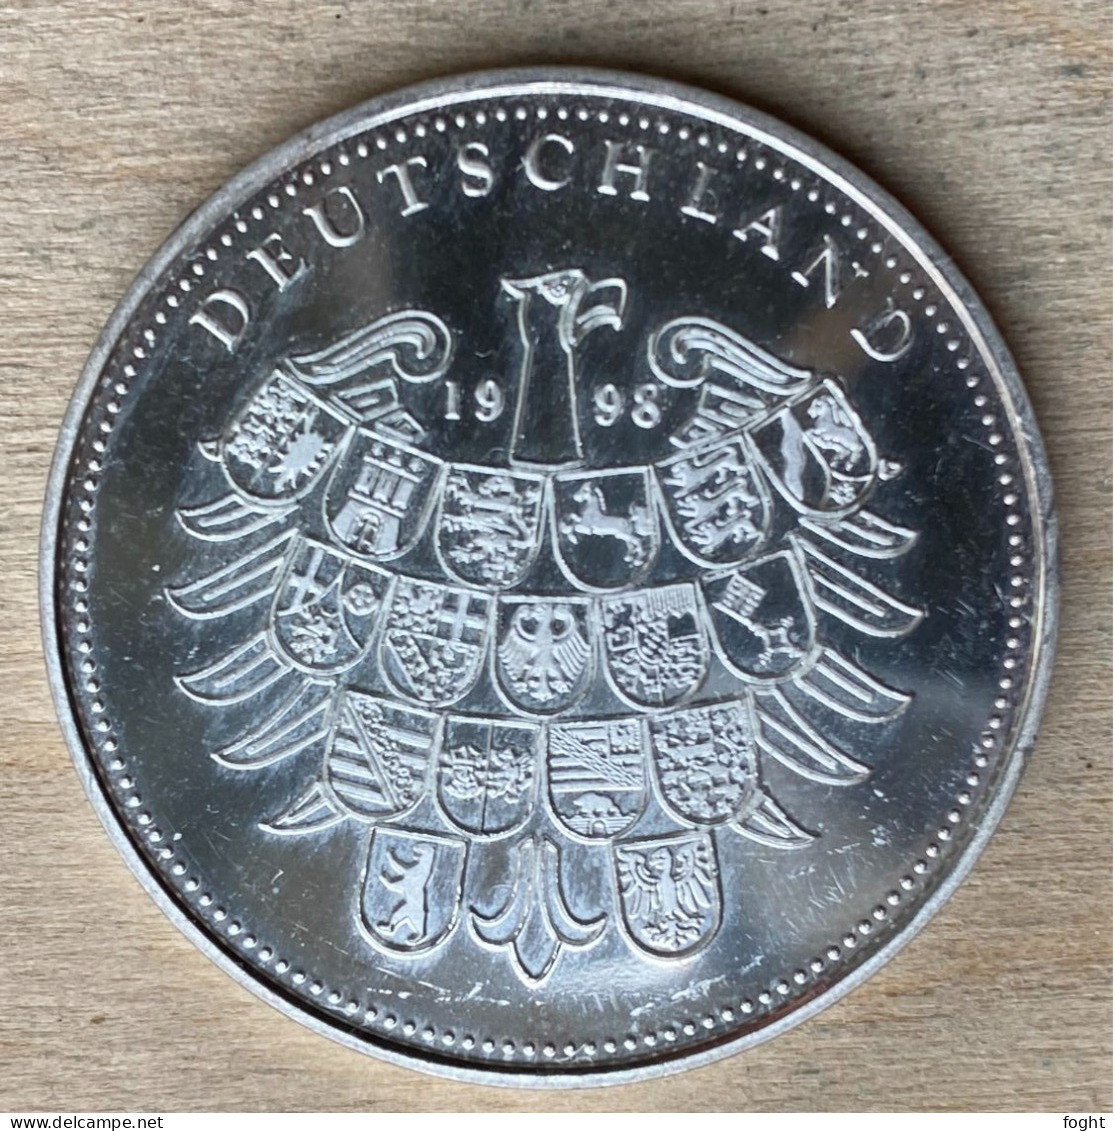 1998 Germany /BRD Medaille  50 Jahre Deutsche Währung .500 Silber,PP,7225 - Professionnels/De Société